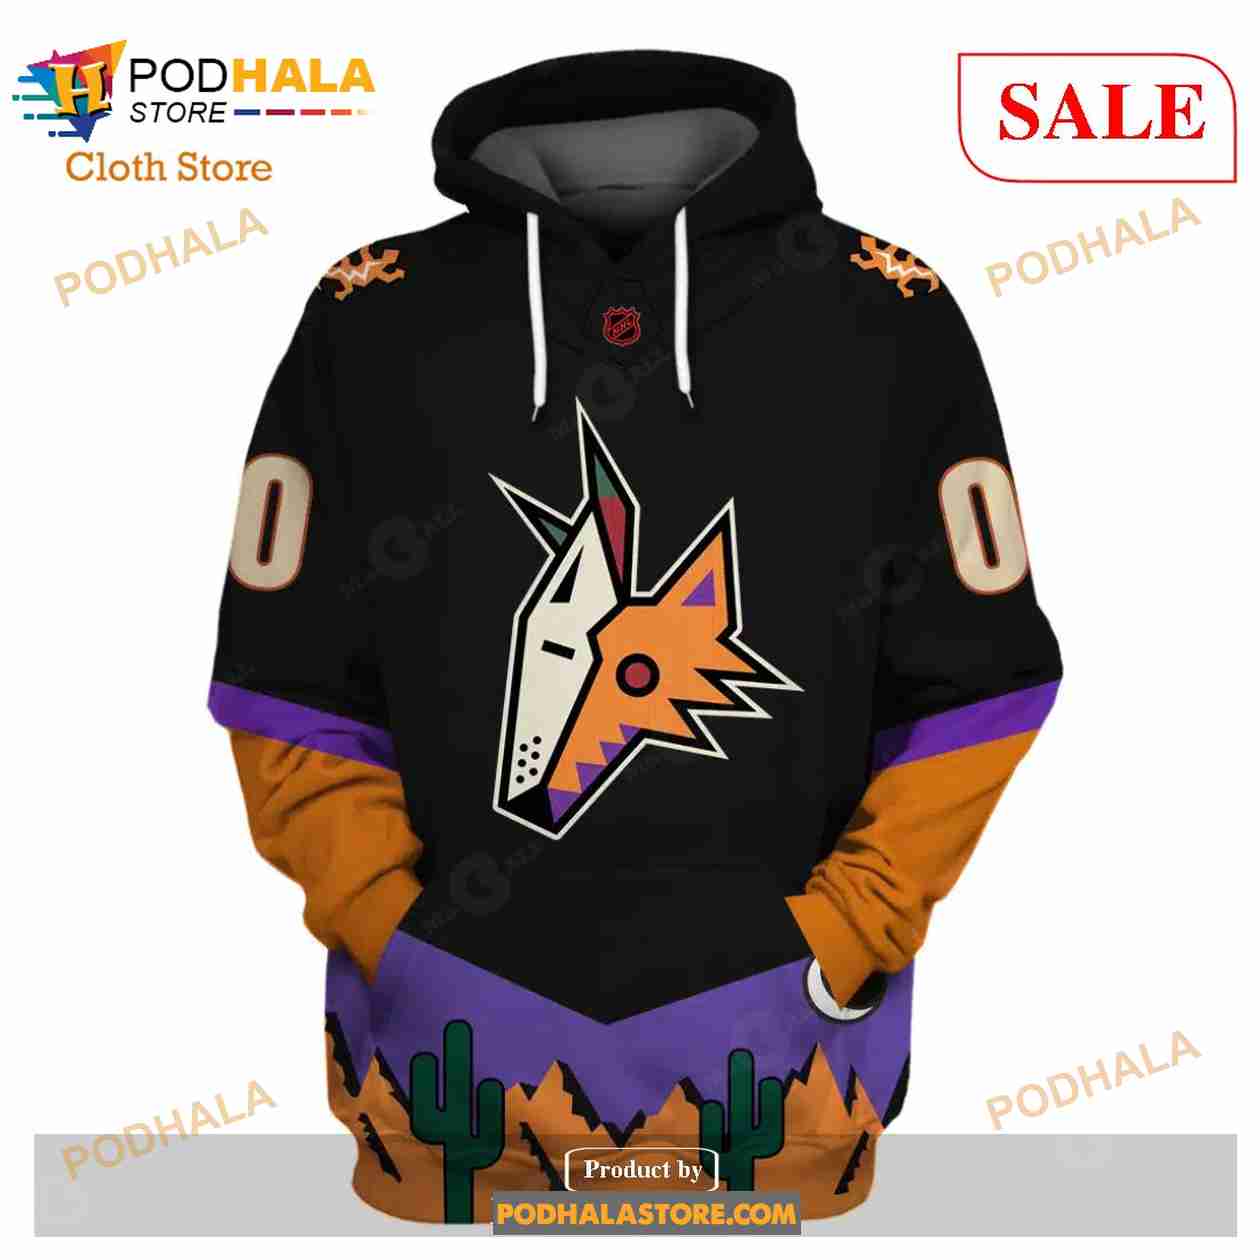 Phoenix Coyotes NHL Fan Sweatshirts for sale